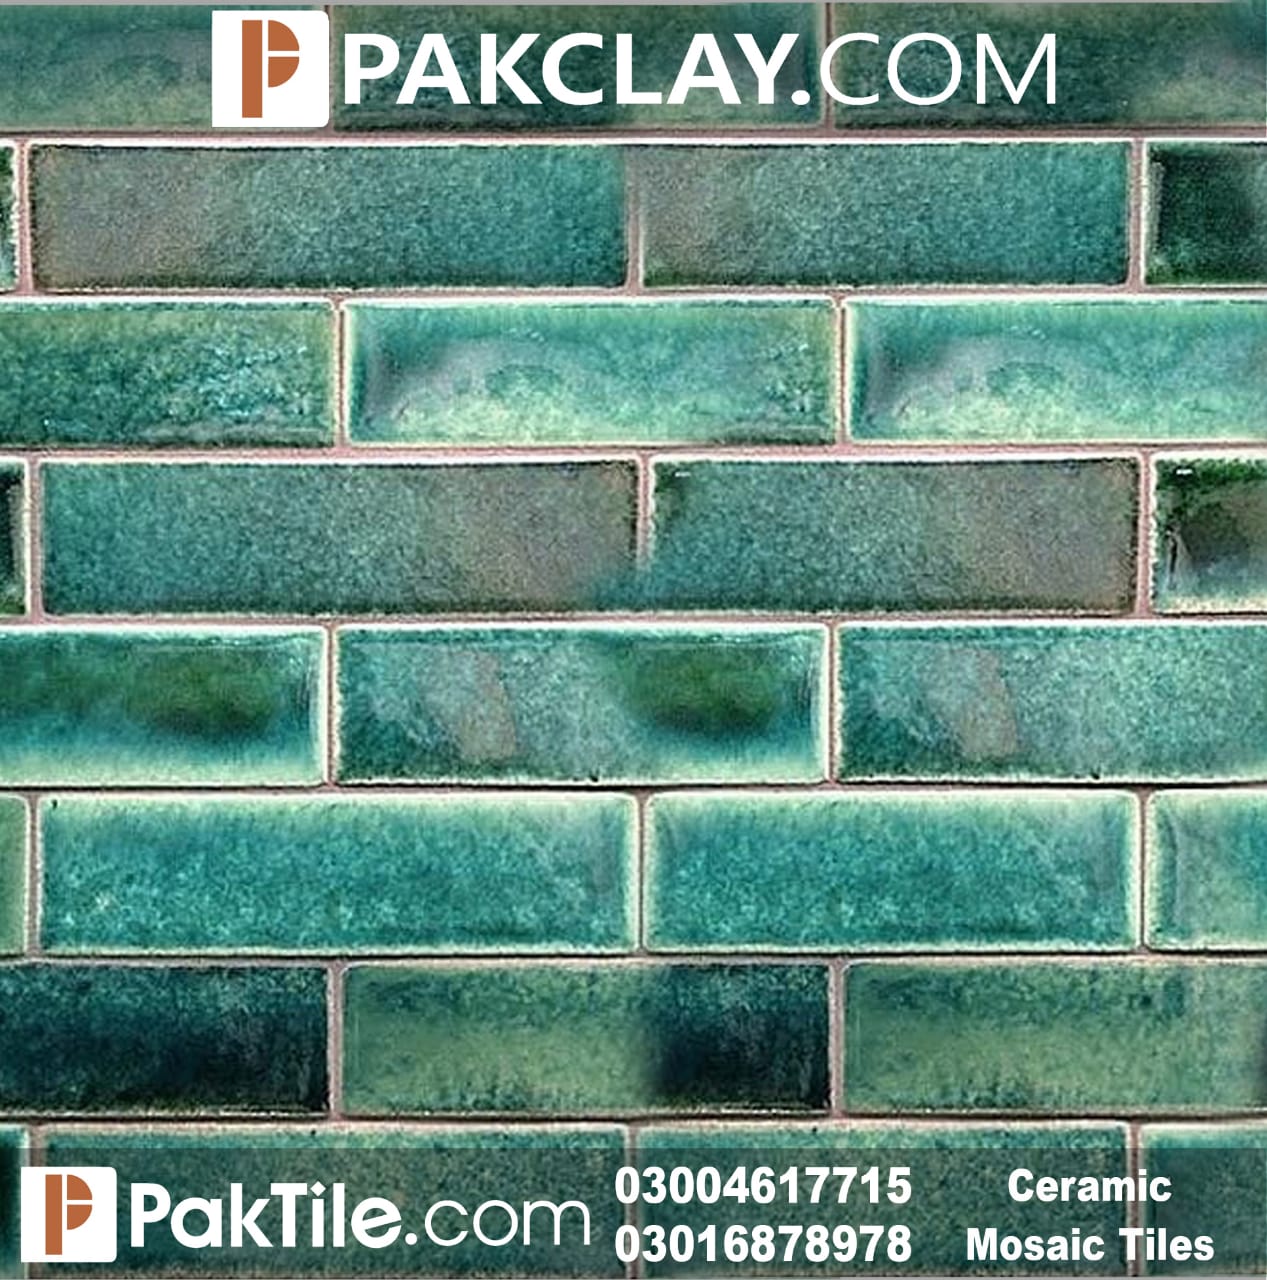 Pak Clay Ceramic Mosaic Tiles in Pakistan